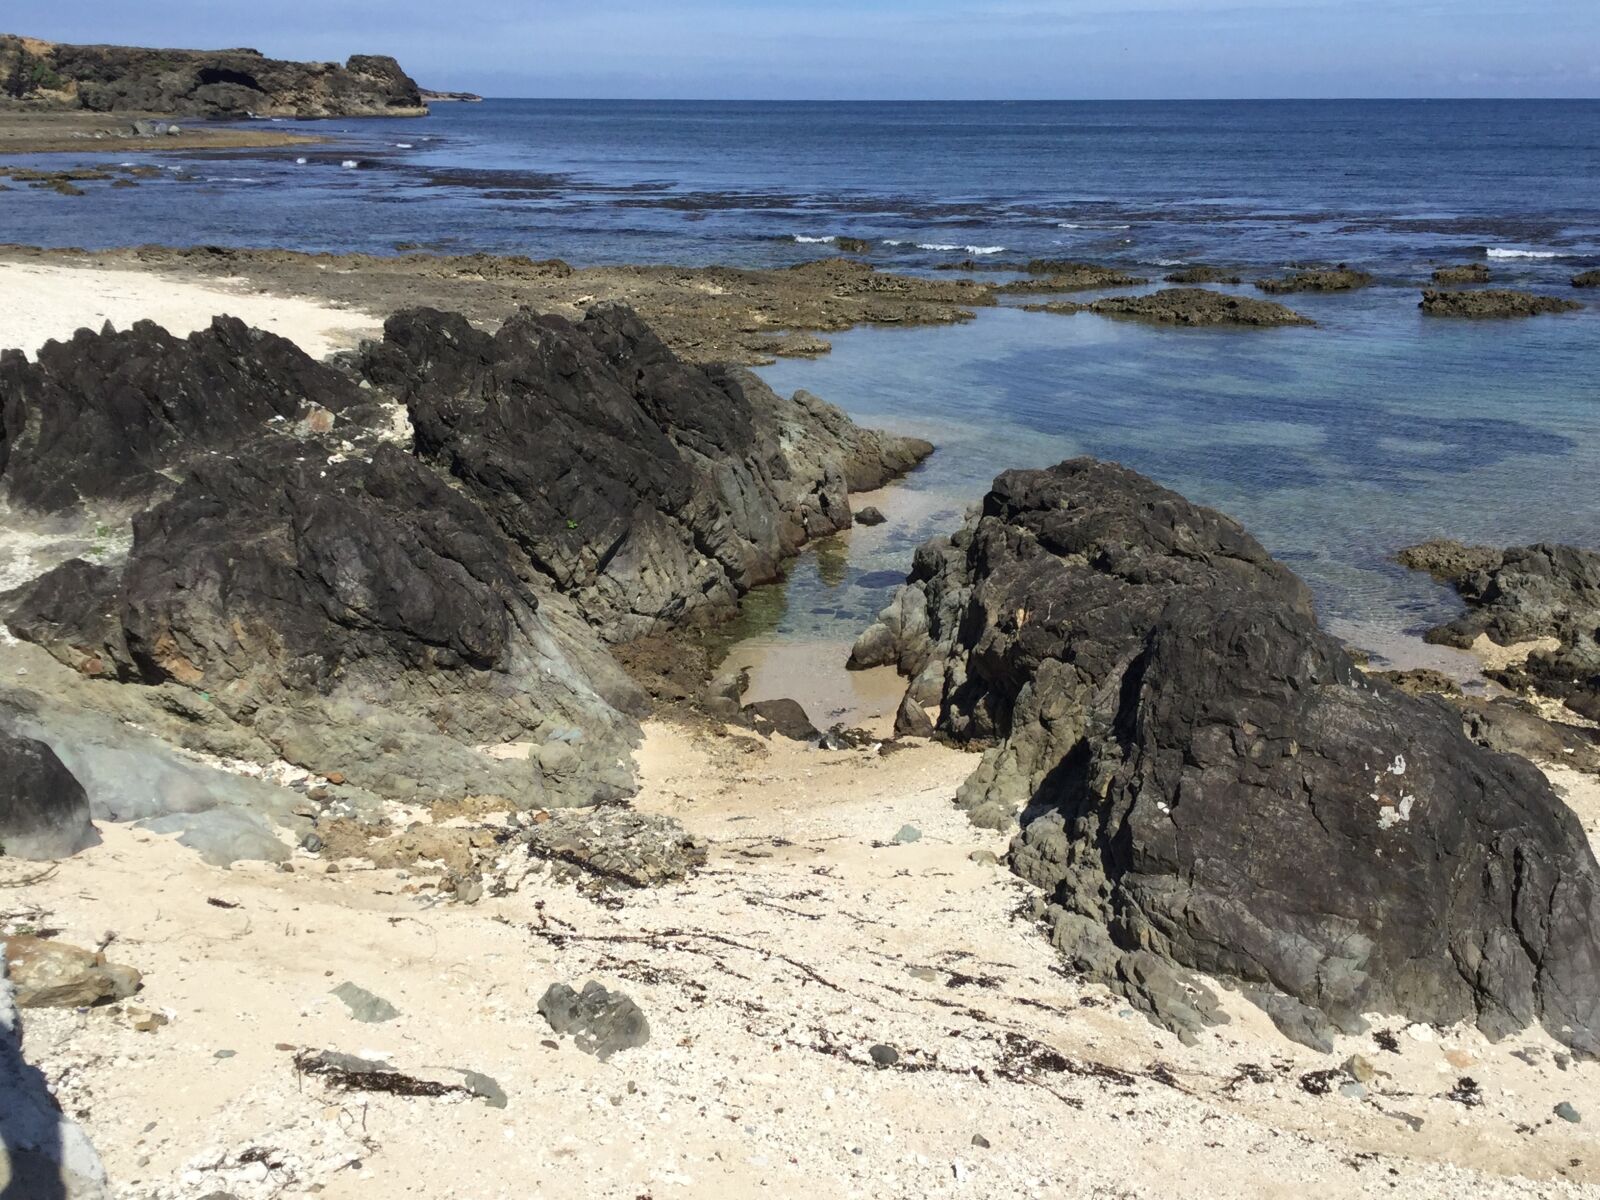 iPad mini 4 back camera 3.3mm f/2.4 sample photo. Sea, rocks, ocean photography